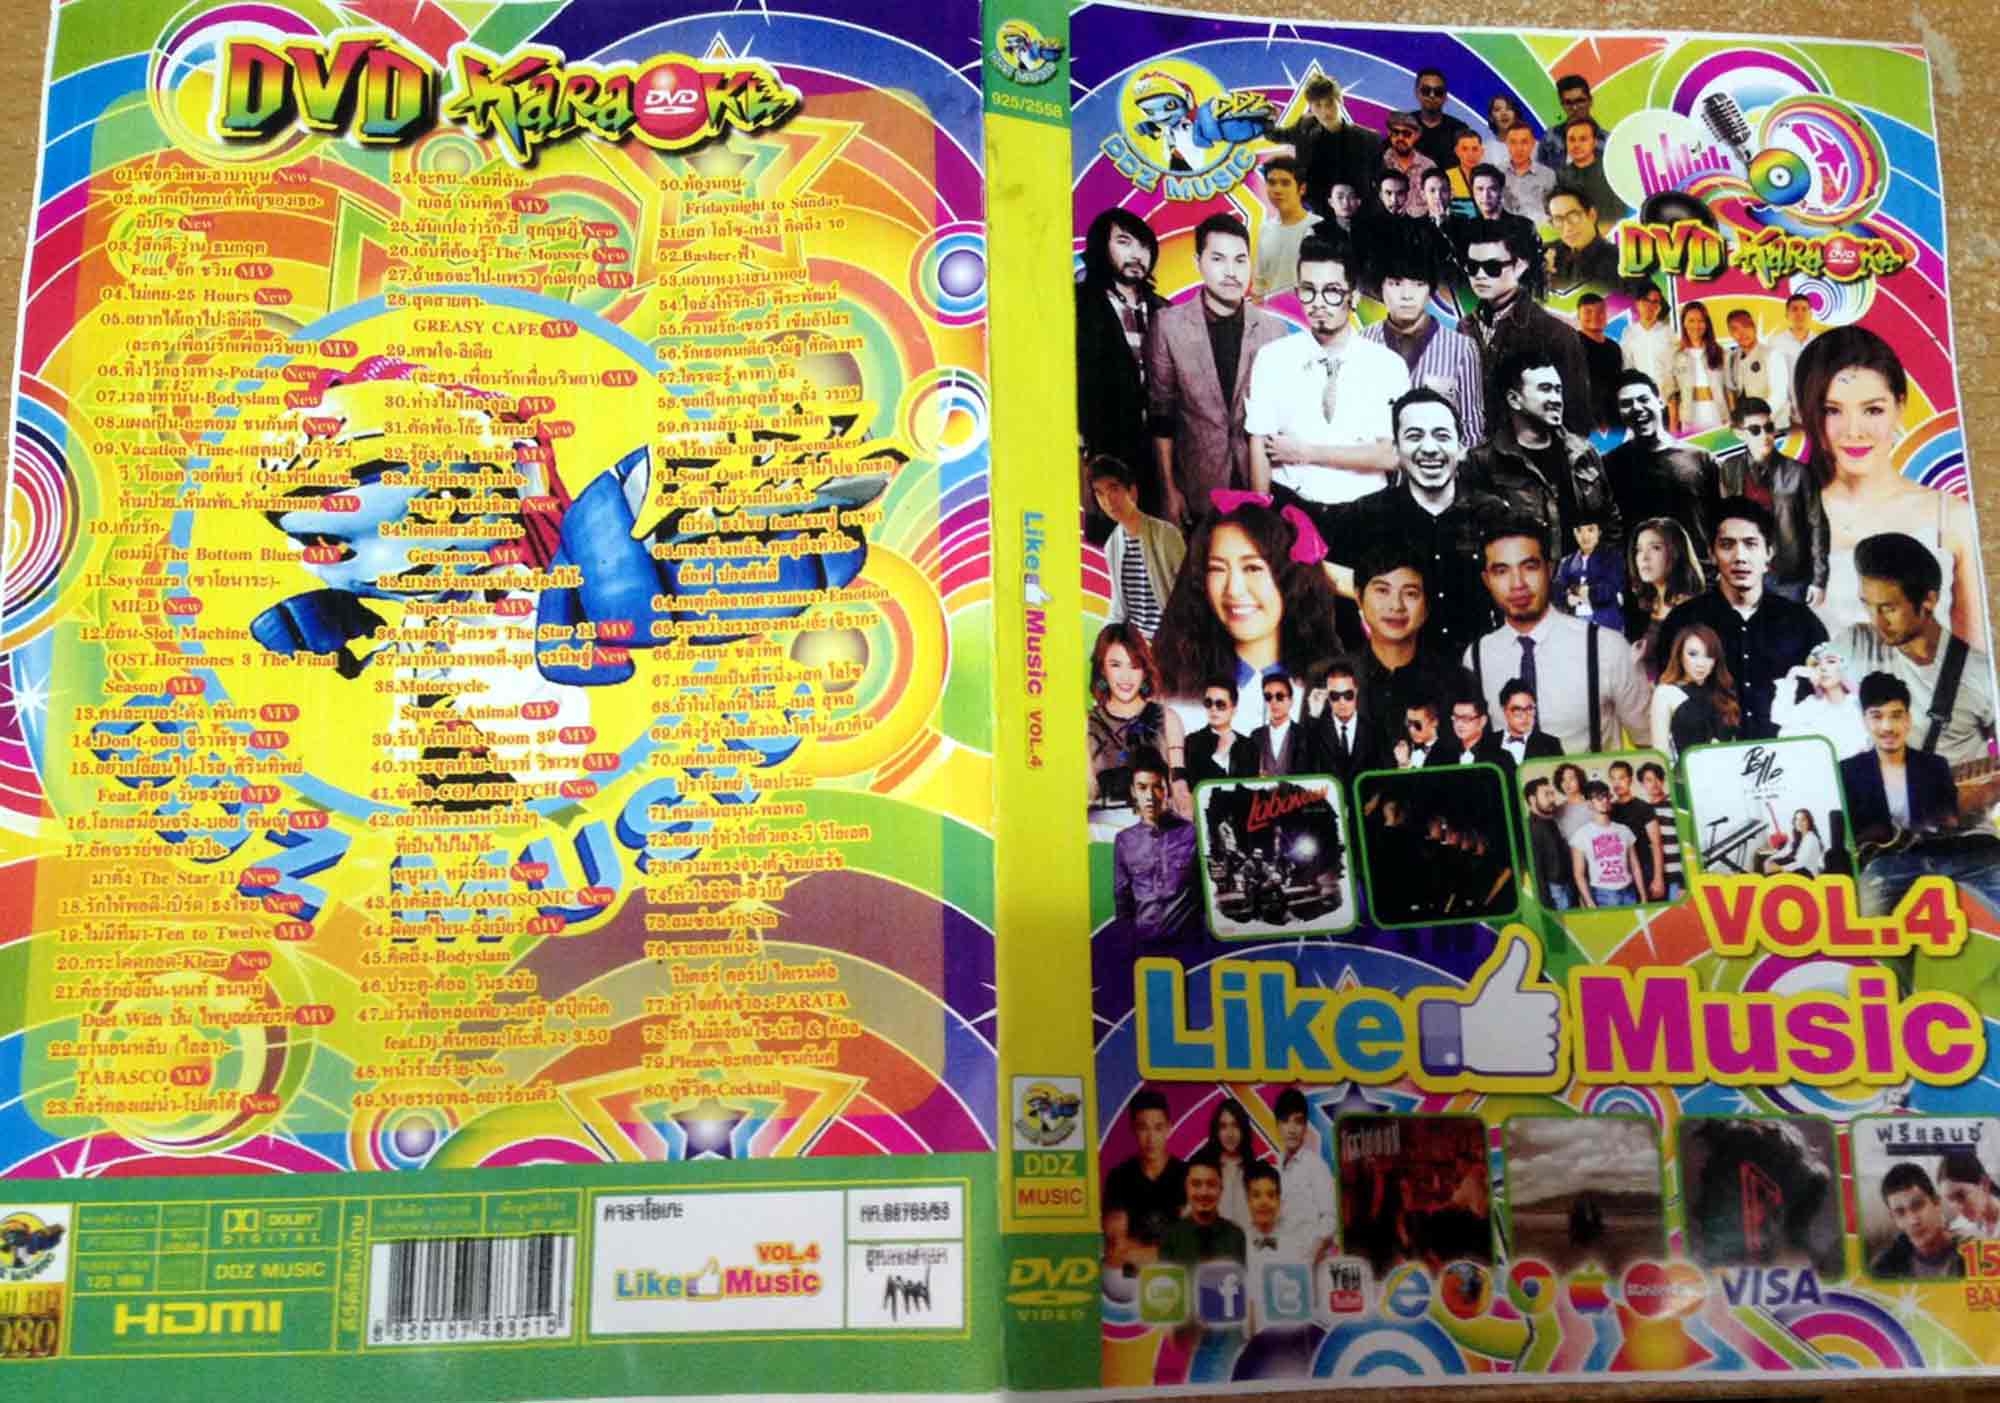 2506 DVD Karaoke Like Music Vol.4